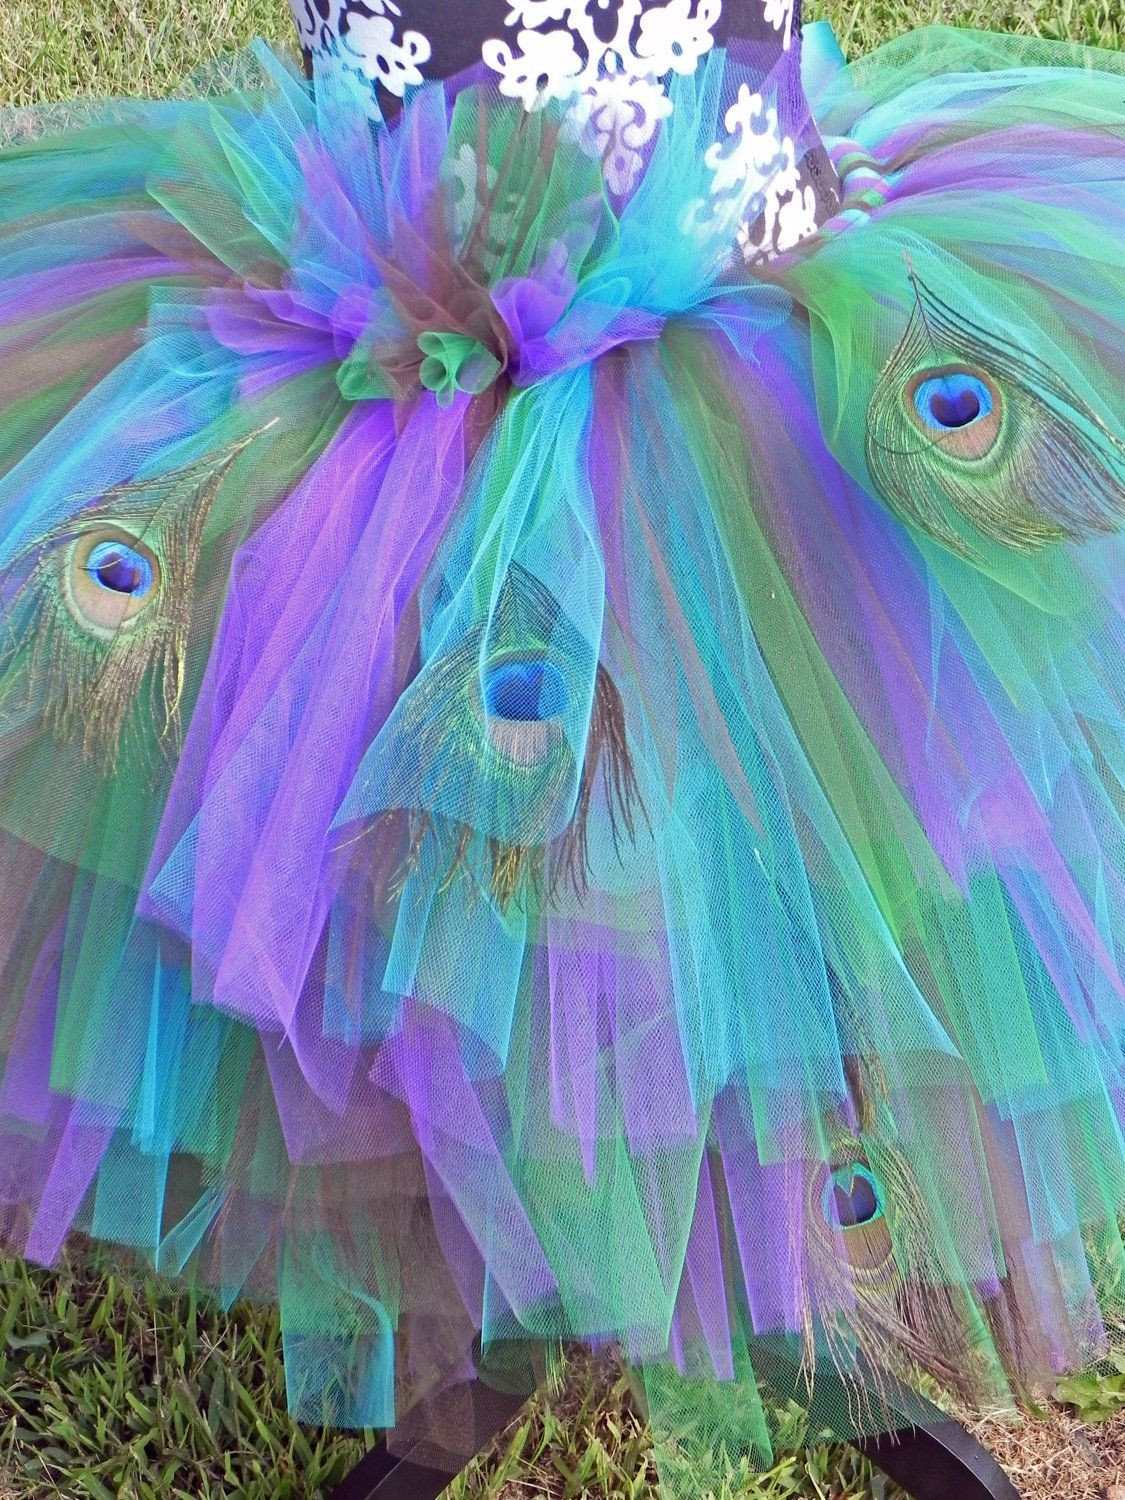 Peacock Halloween Costumes DIY
 Peafection Peacock Adult Elaborate Tutu Costume $110 00